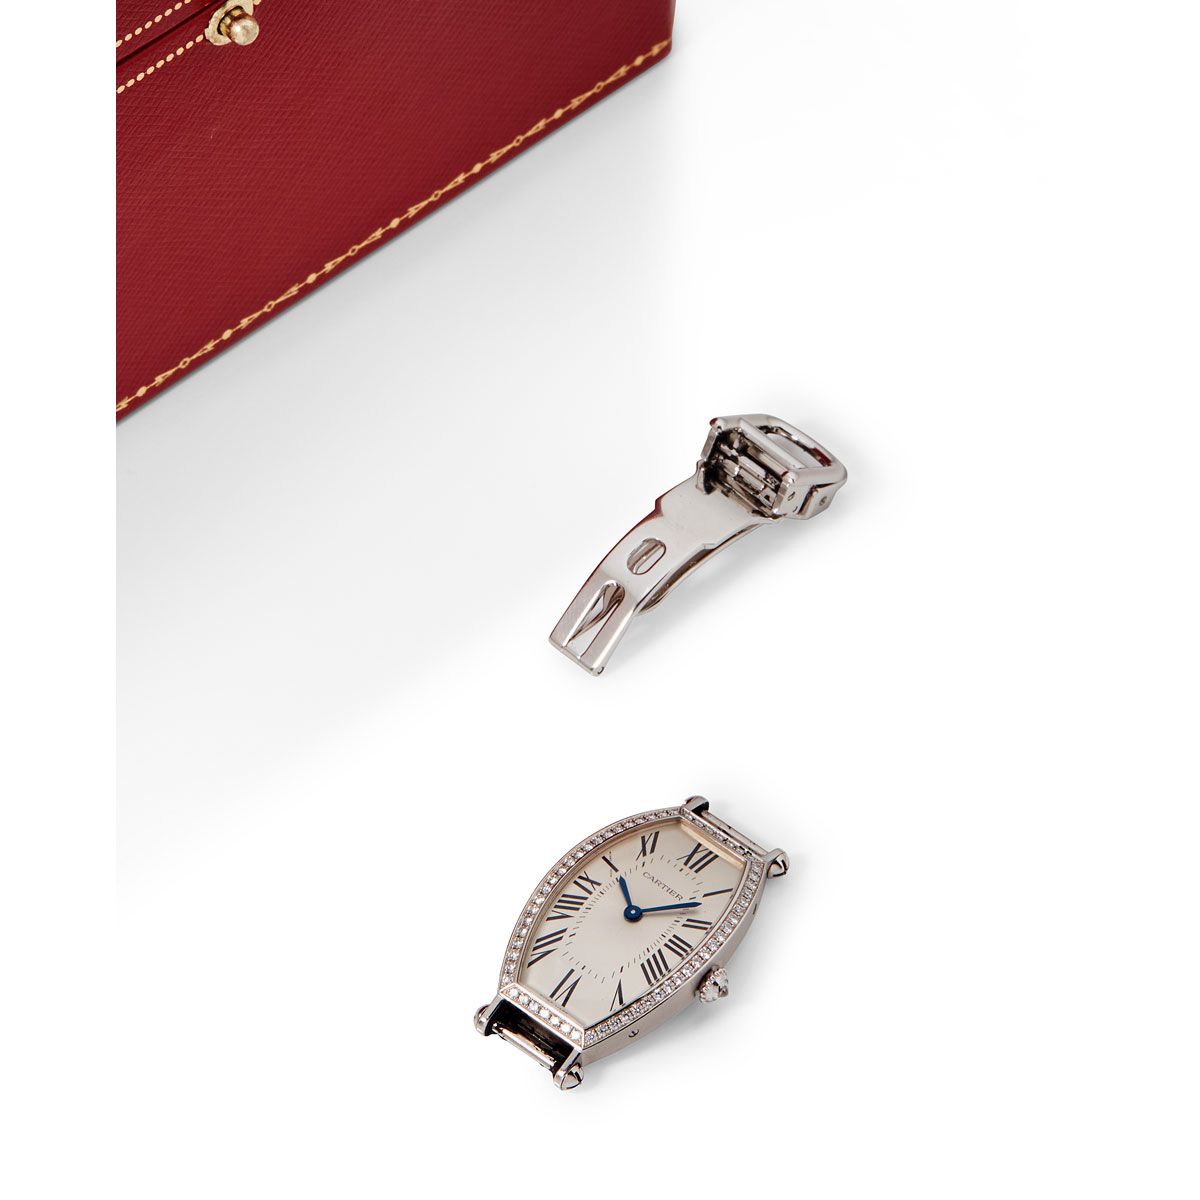 Null Cartier, Tonneau, ref. 2711, n. 037705, 2009 circa.

Splendido orologio da &hellip;